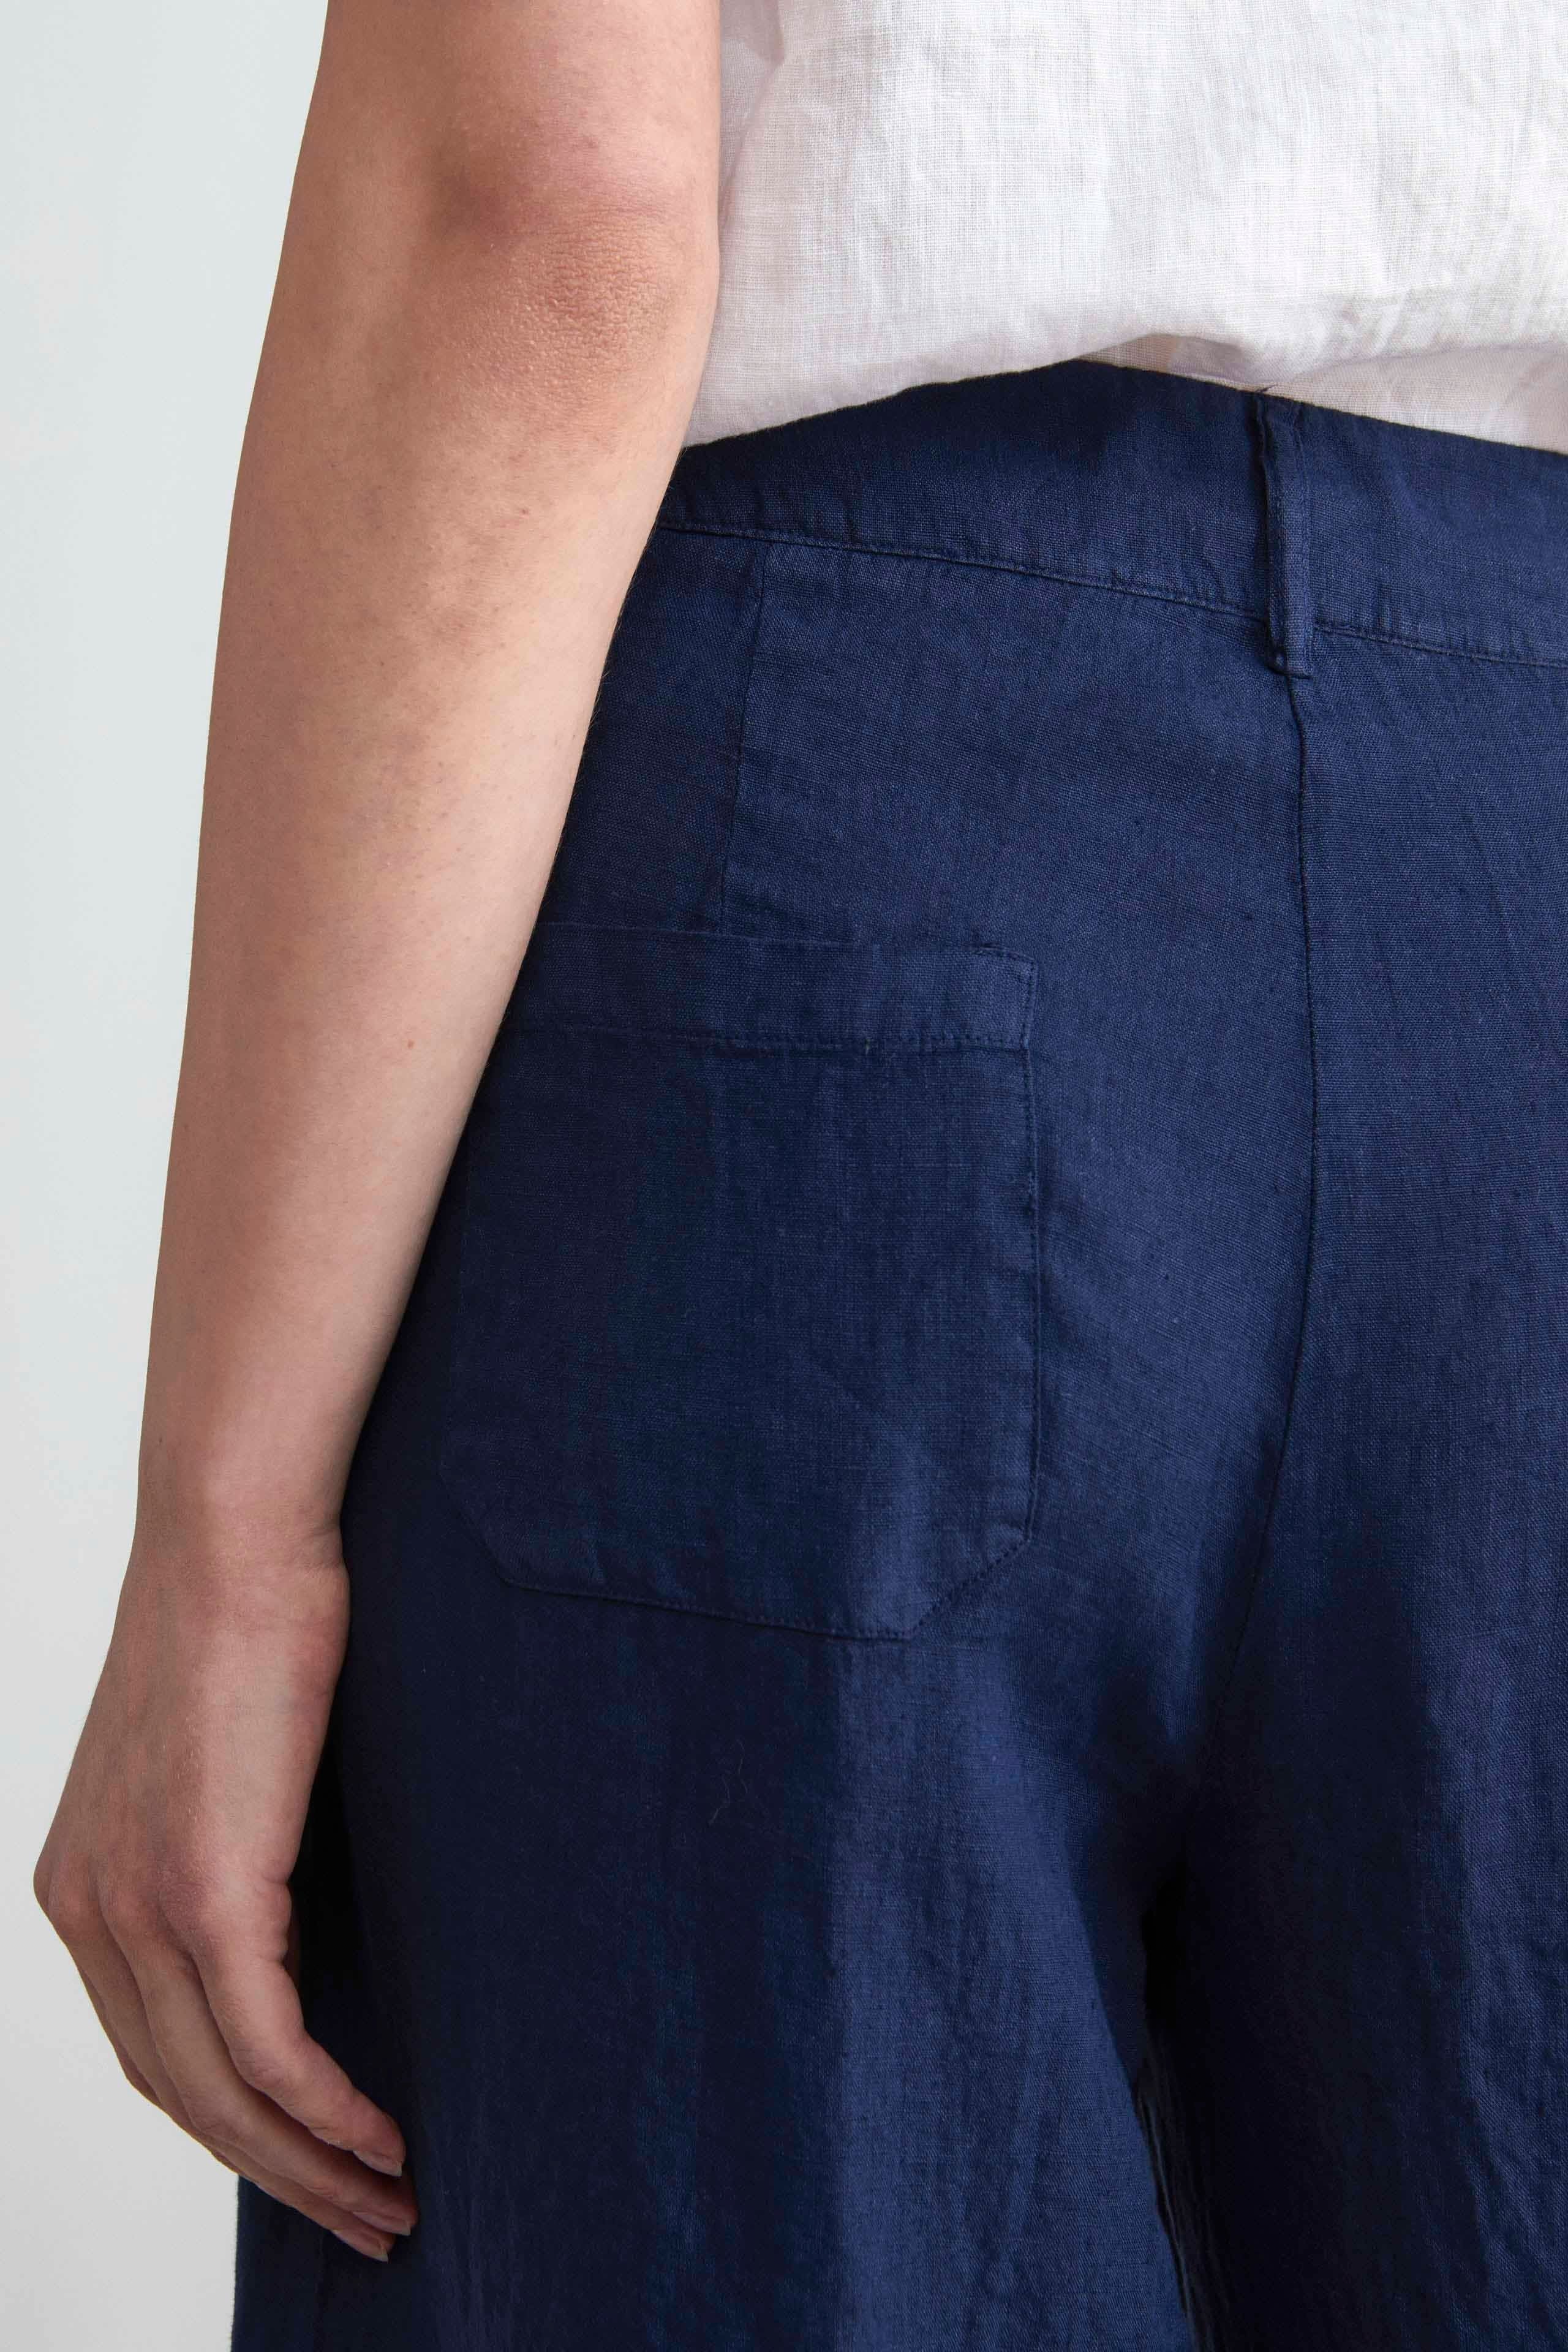 Pantaloni in lino cropped - BLU COPIATIVO